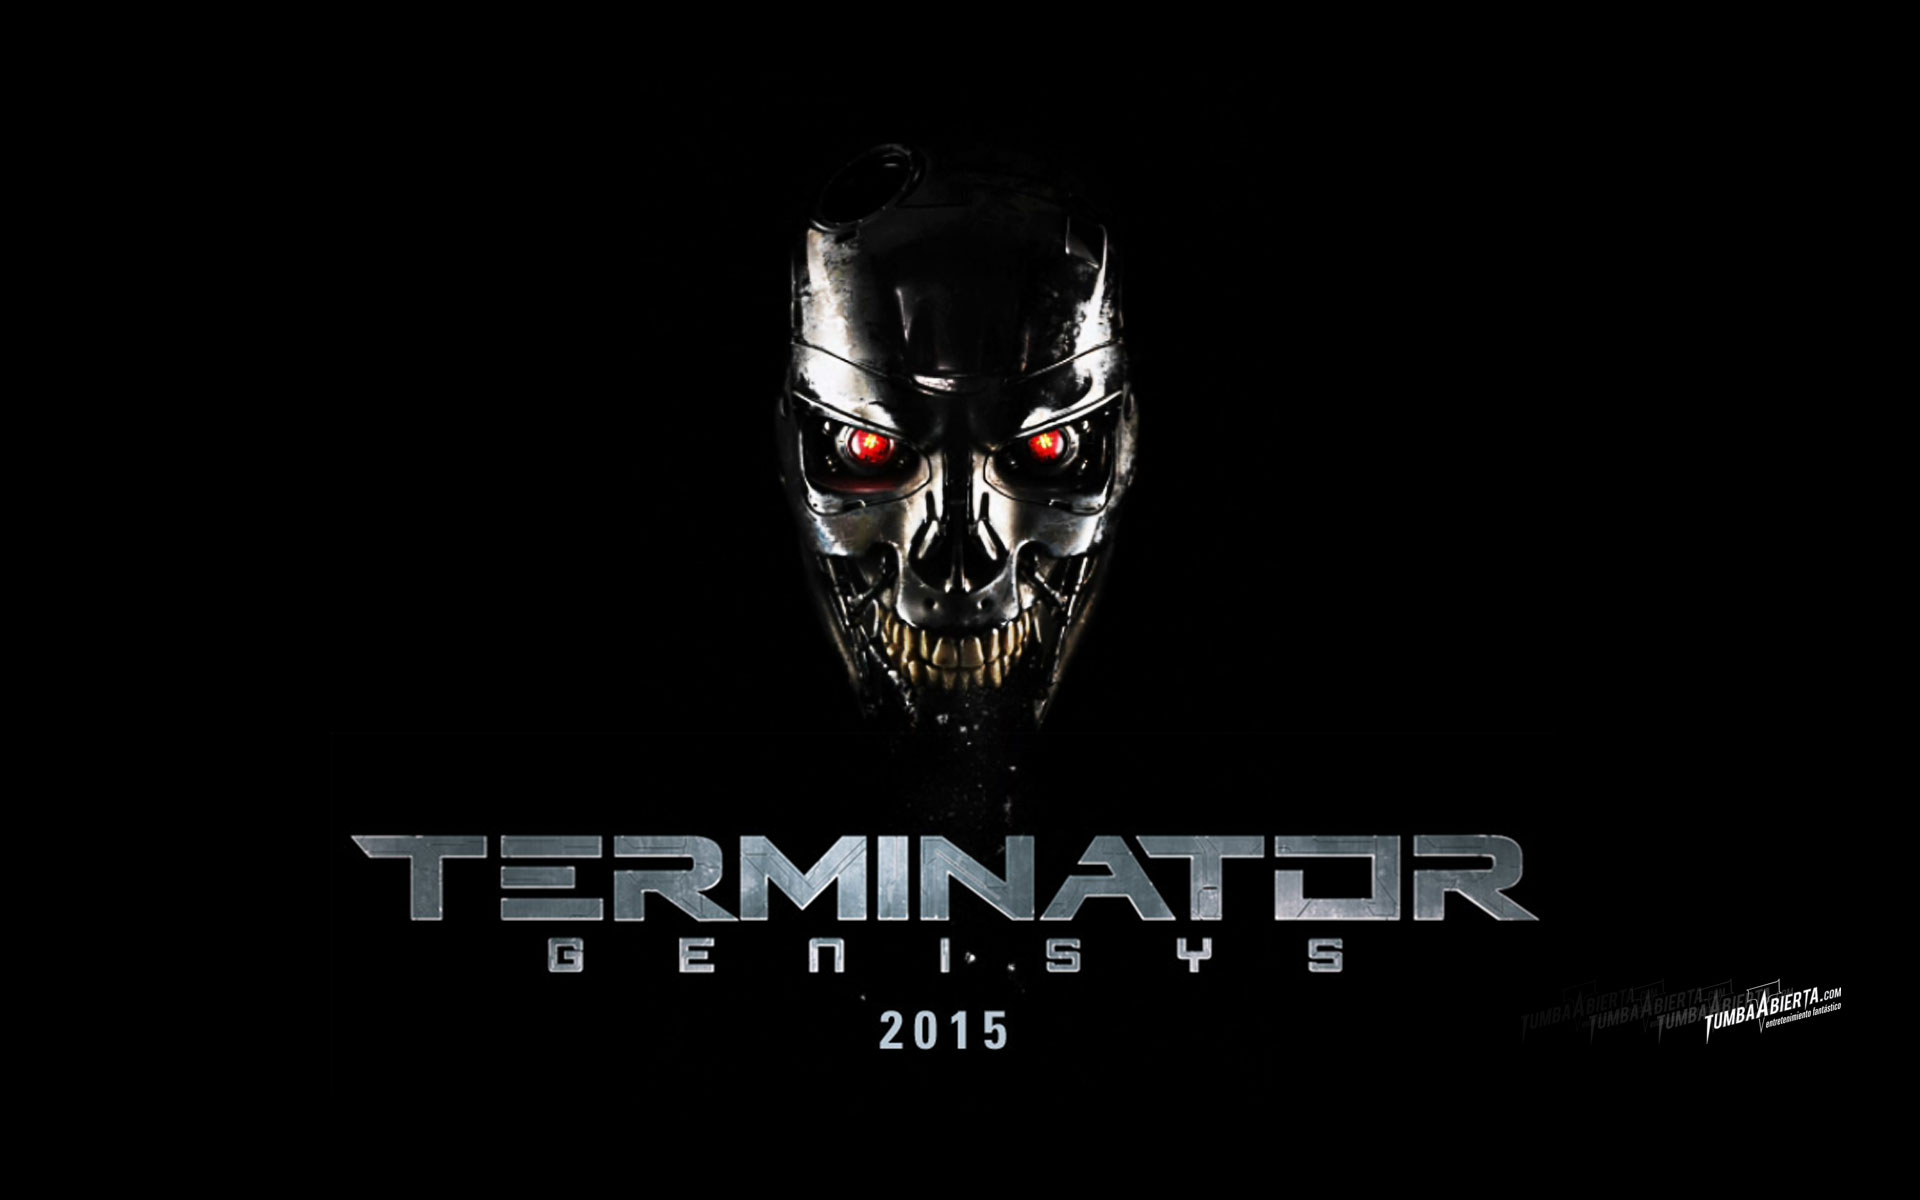 100+] Terminator Wallpapers | Wallpapers.com